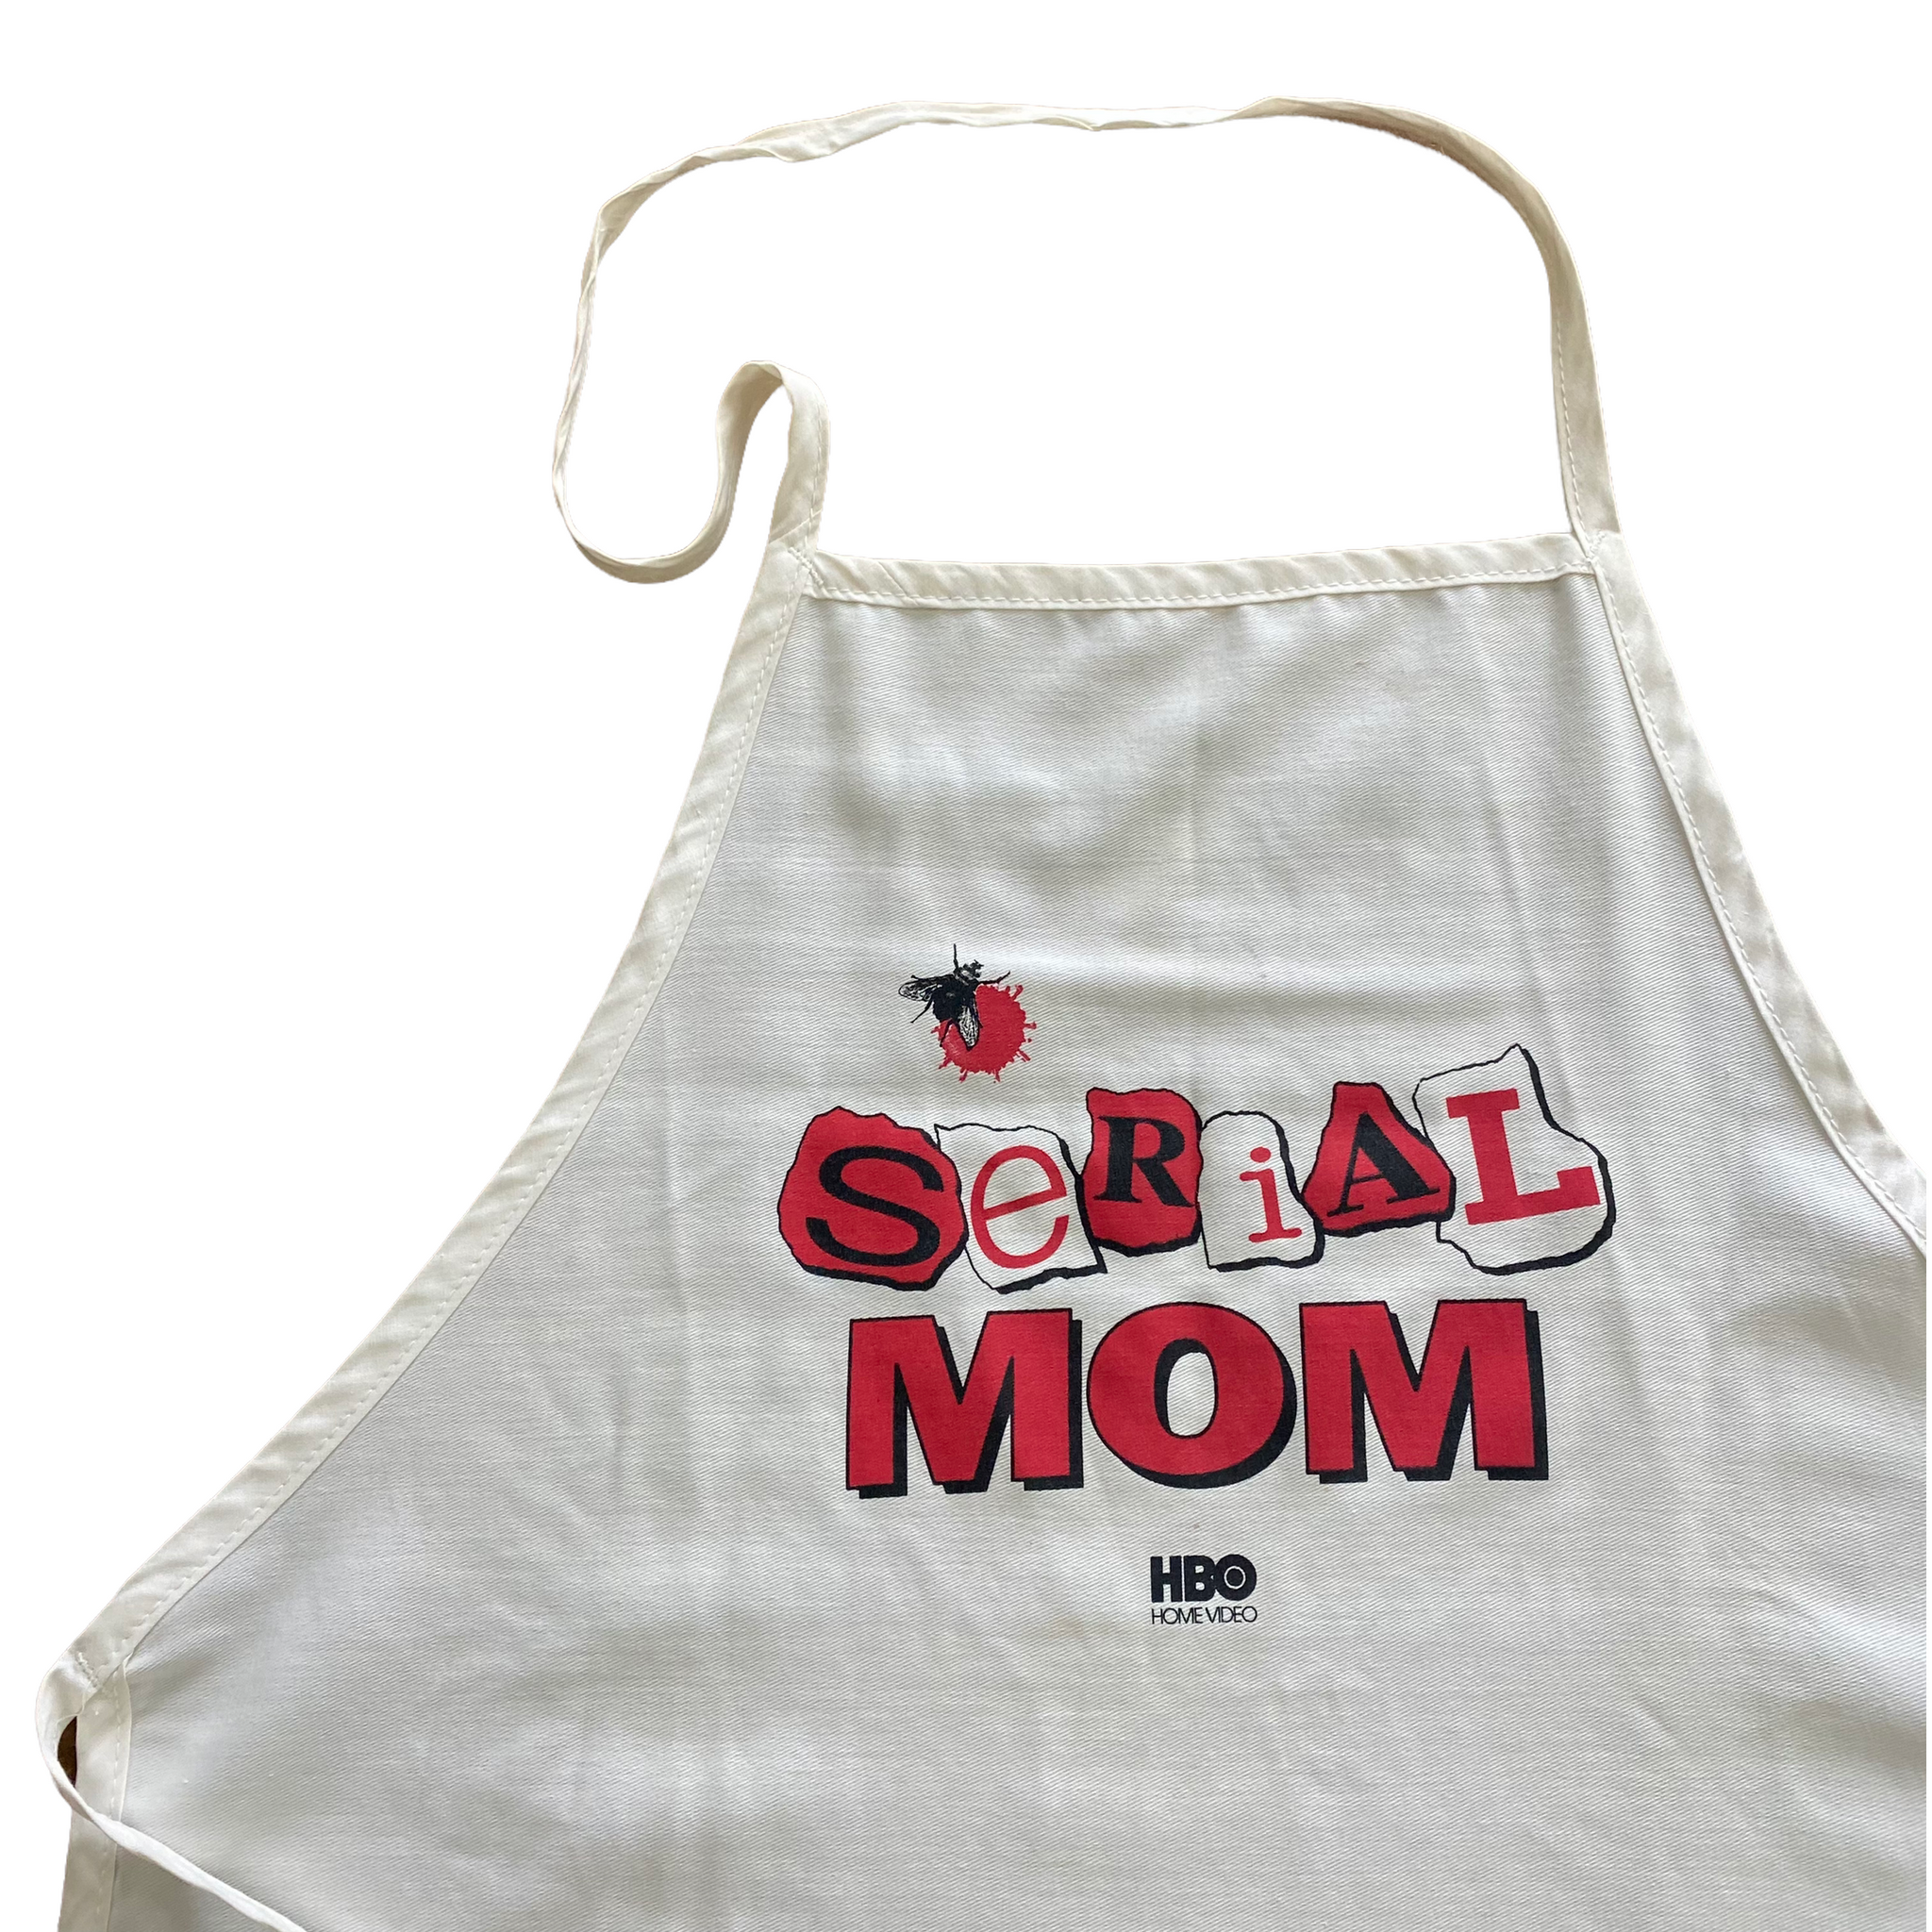 HBO Serial mom promo apron